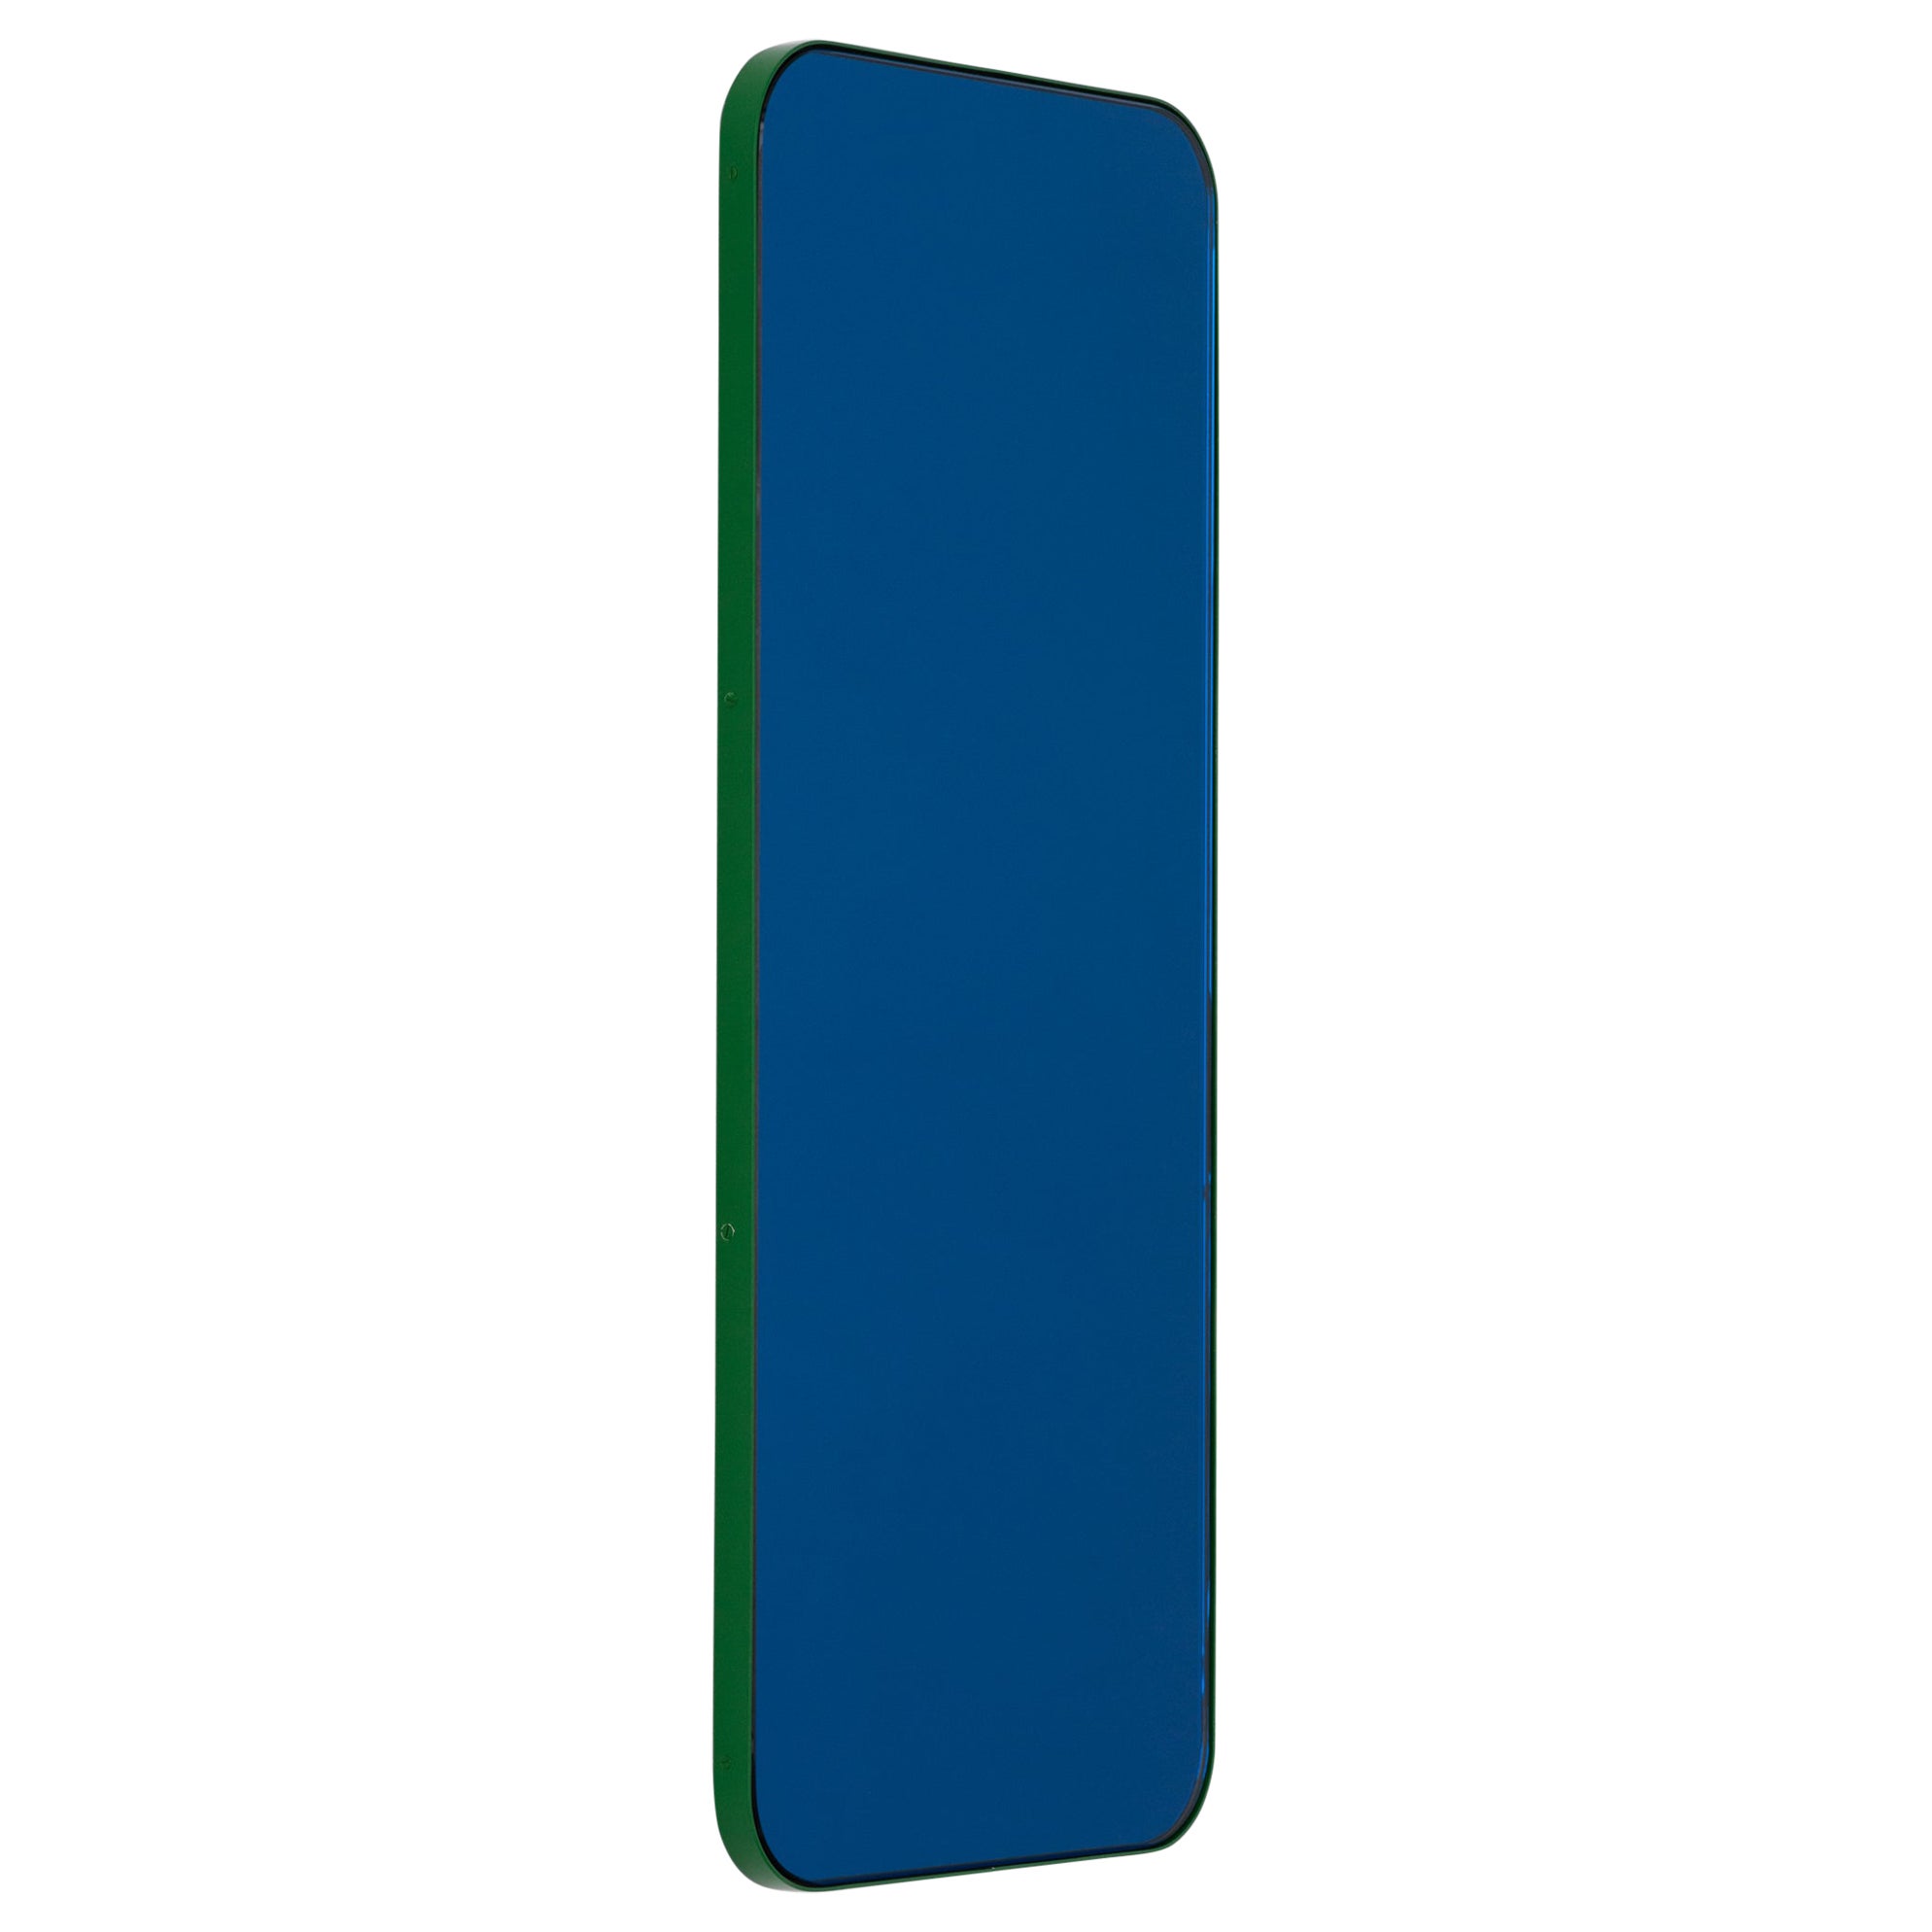 Quadris Rectangular Contemporary Blue Mirror mit modernem grünem Rahmen, groß